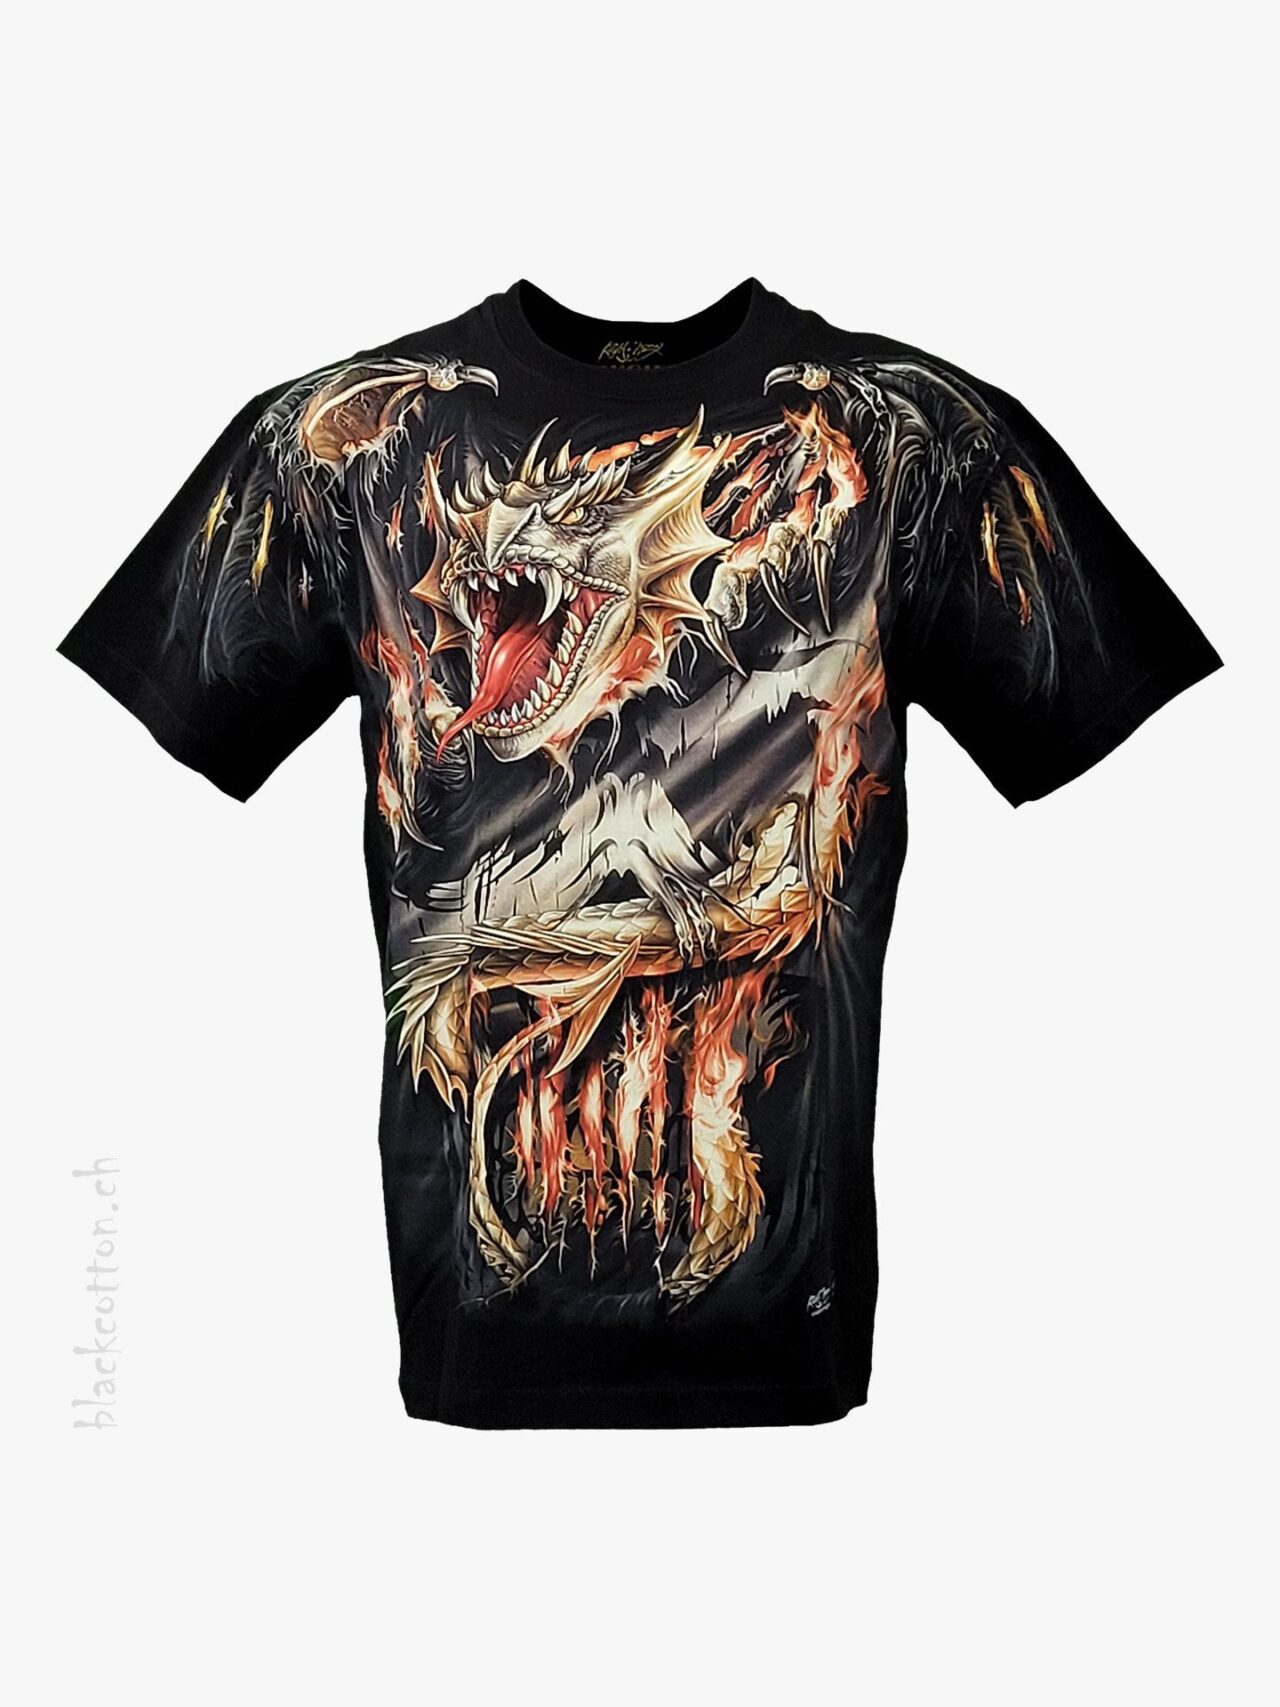 T-Shirt Drache Feuer Glow-in-the-Dark ROCK CHANG